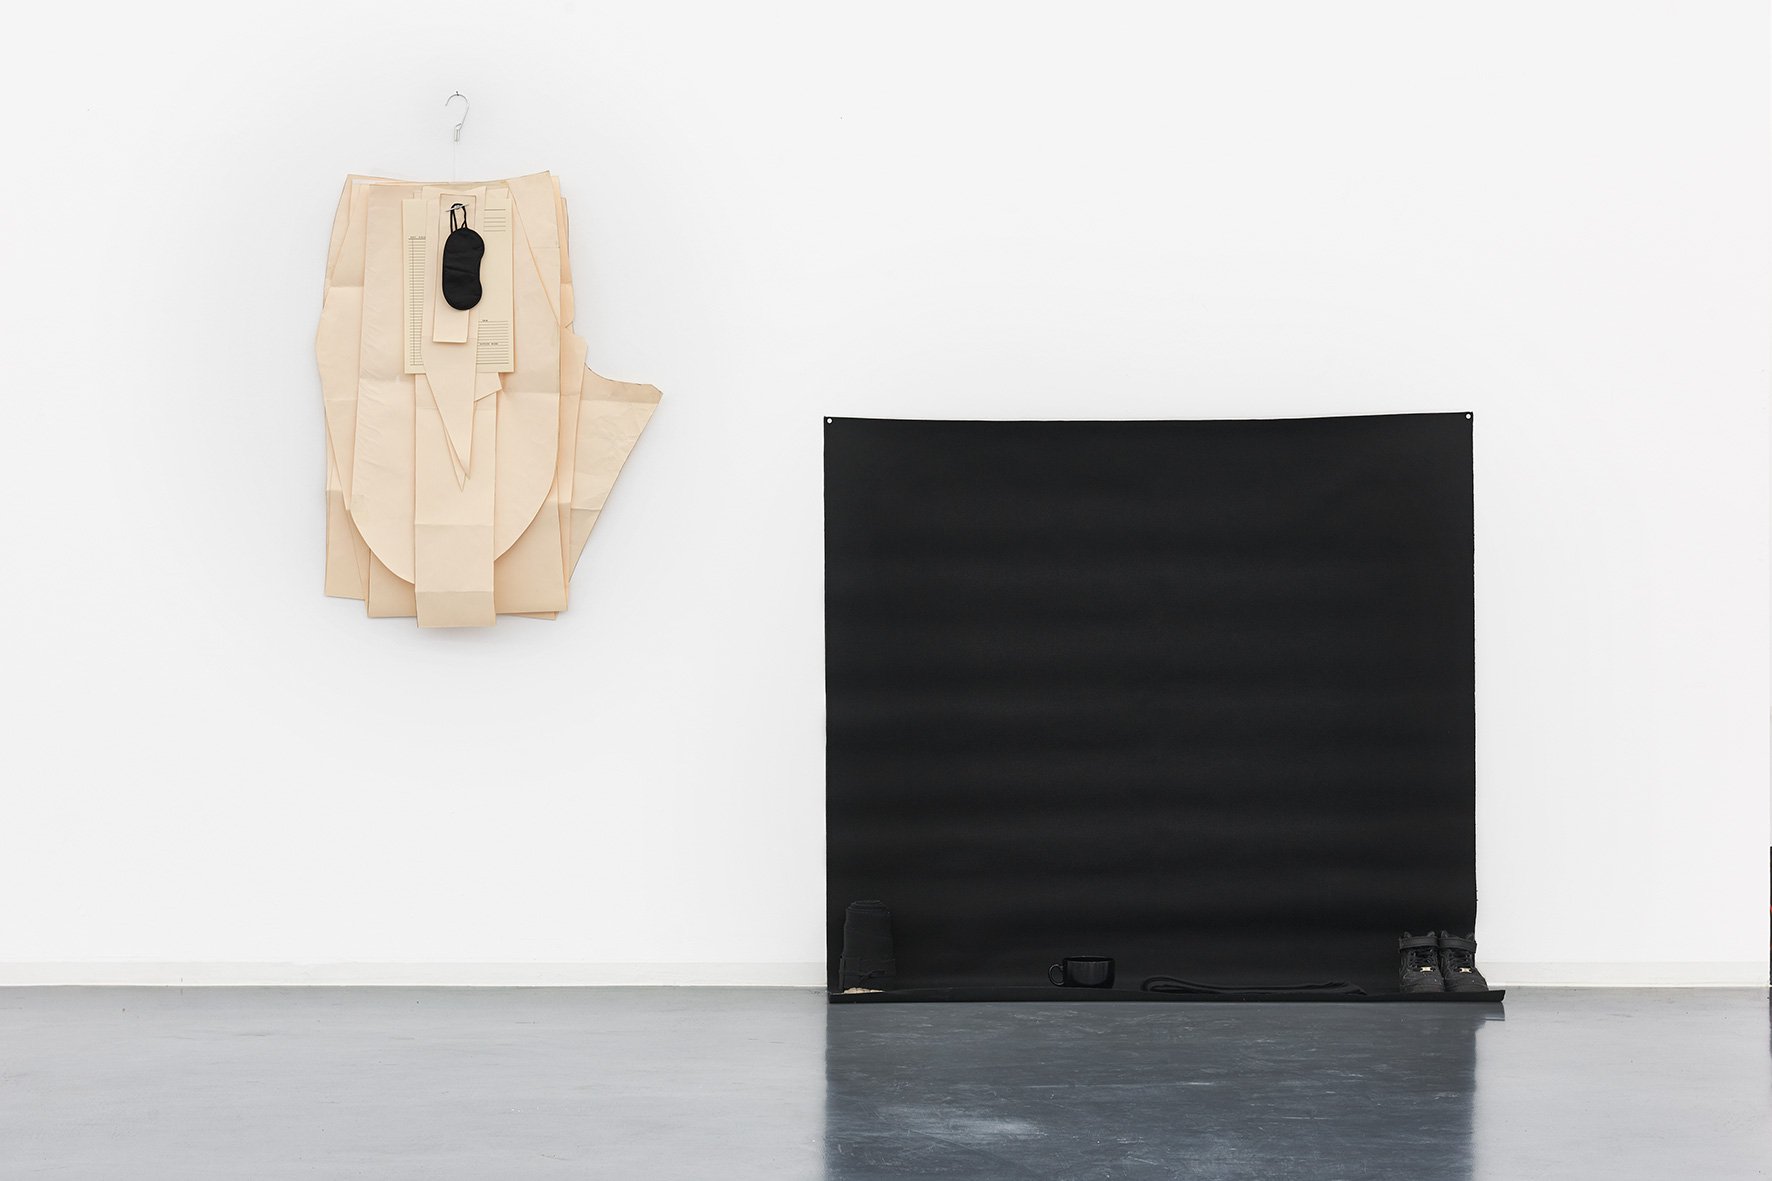 Amanda Ross-Ho, Untitled Production Still (SLEEP PATTERN), 2017. Installation view, 2017, Bonner Kunstverein. Photo: Mareike Tocha